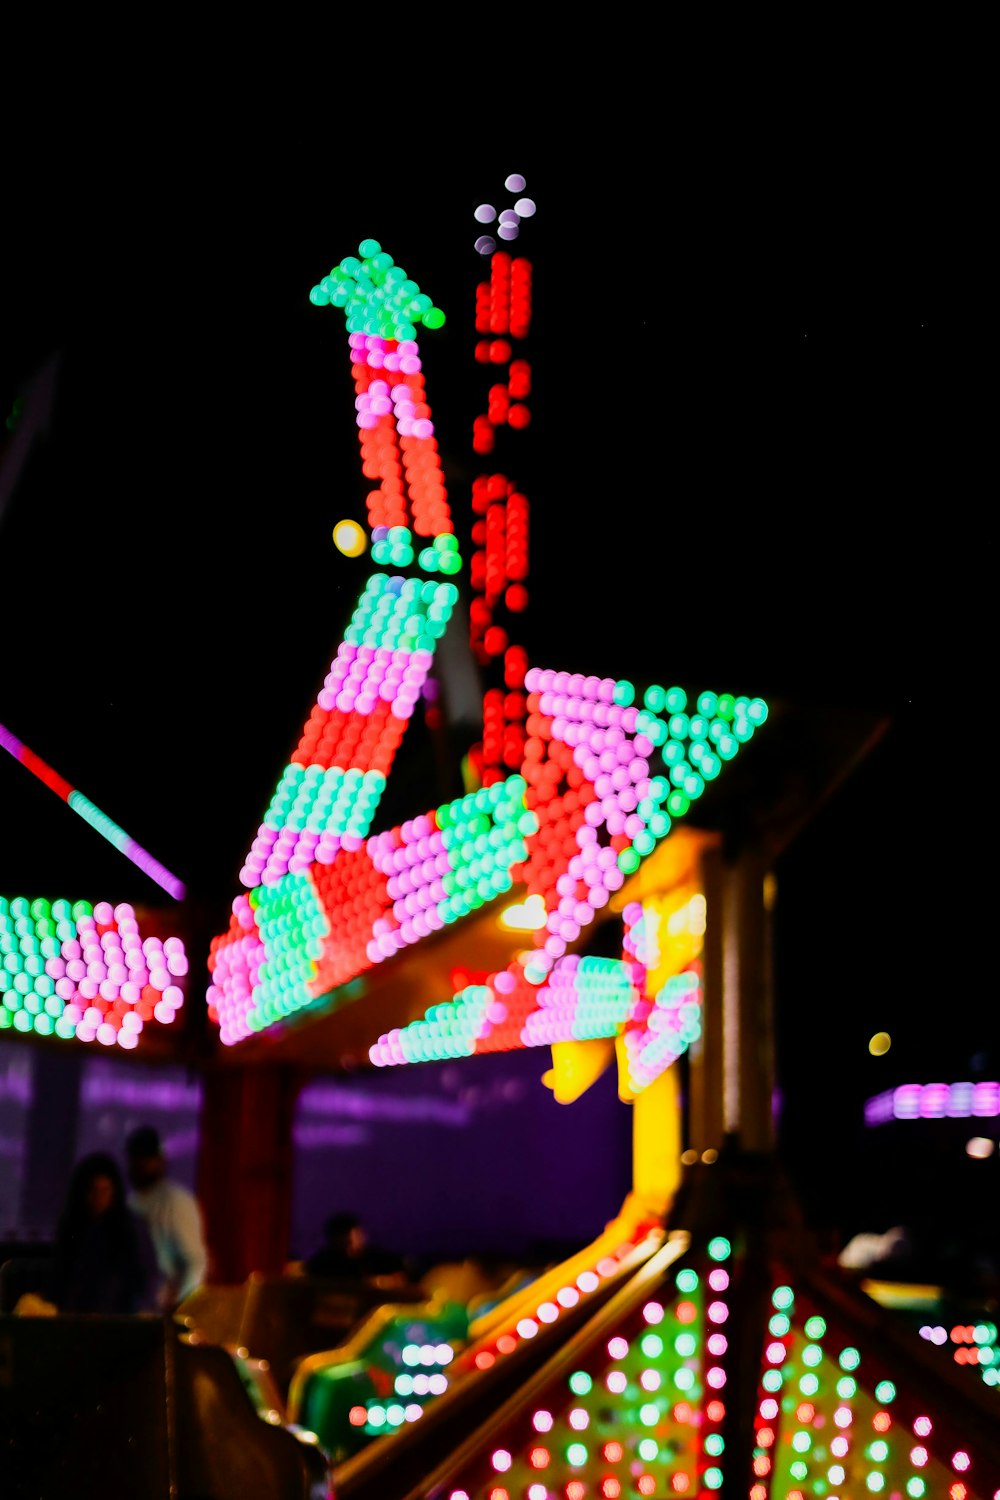 a close up of a carnival ride at night